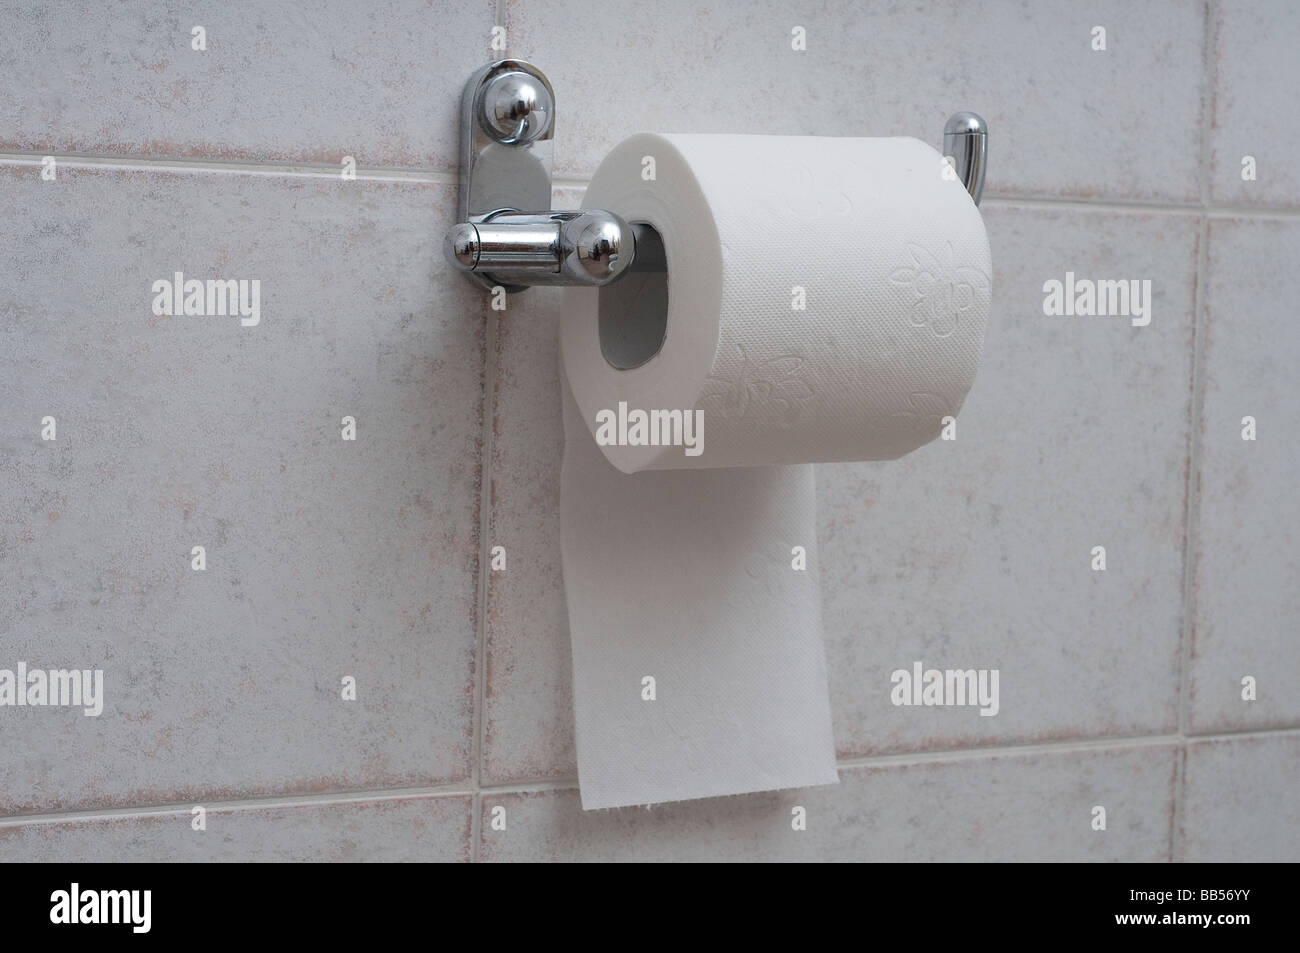 toilet paper Stock Photo